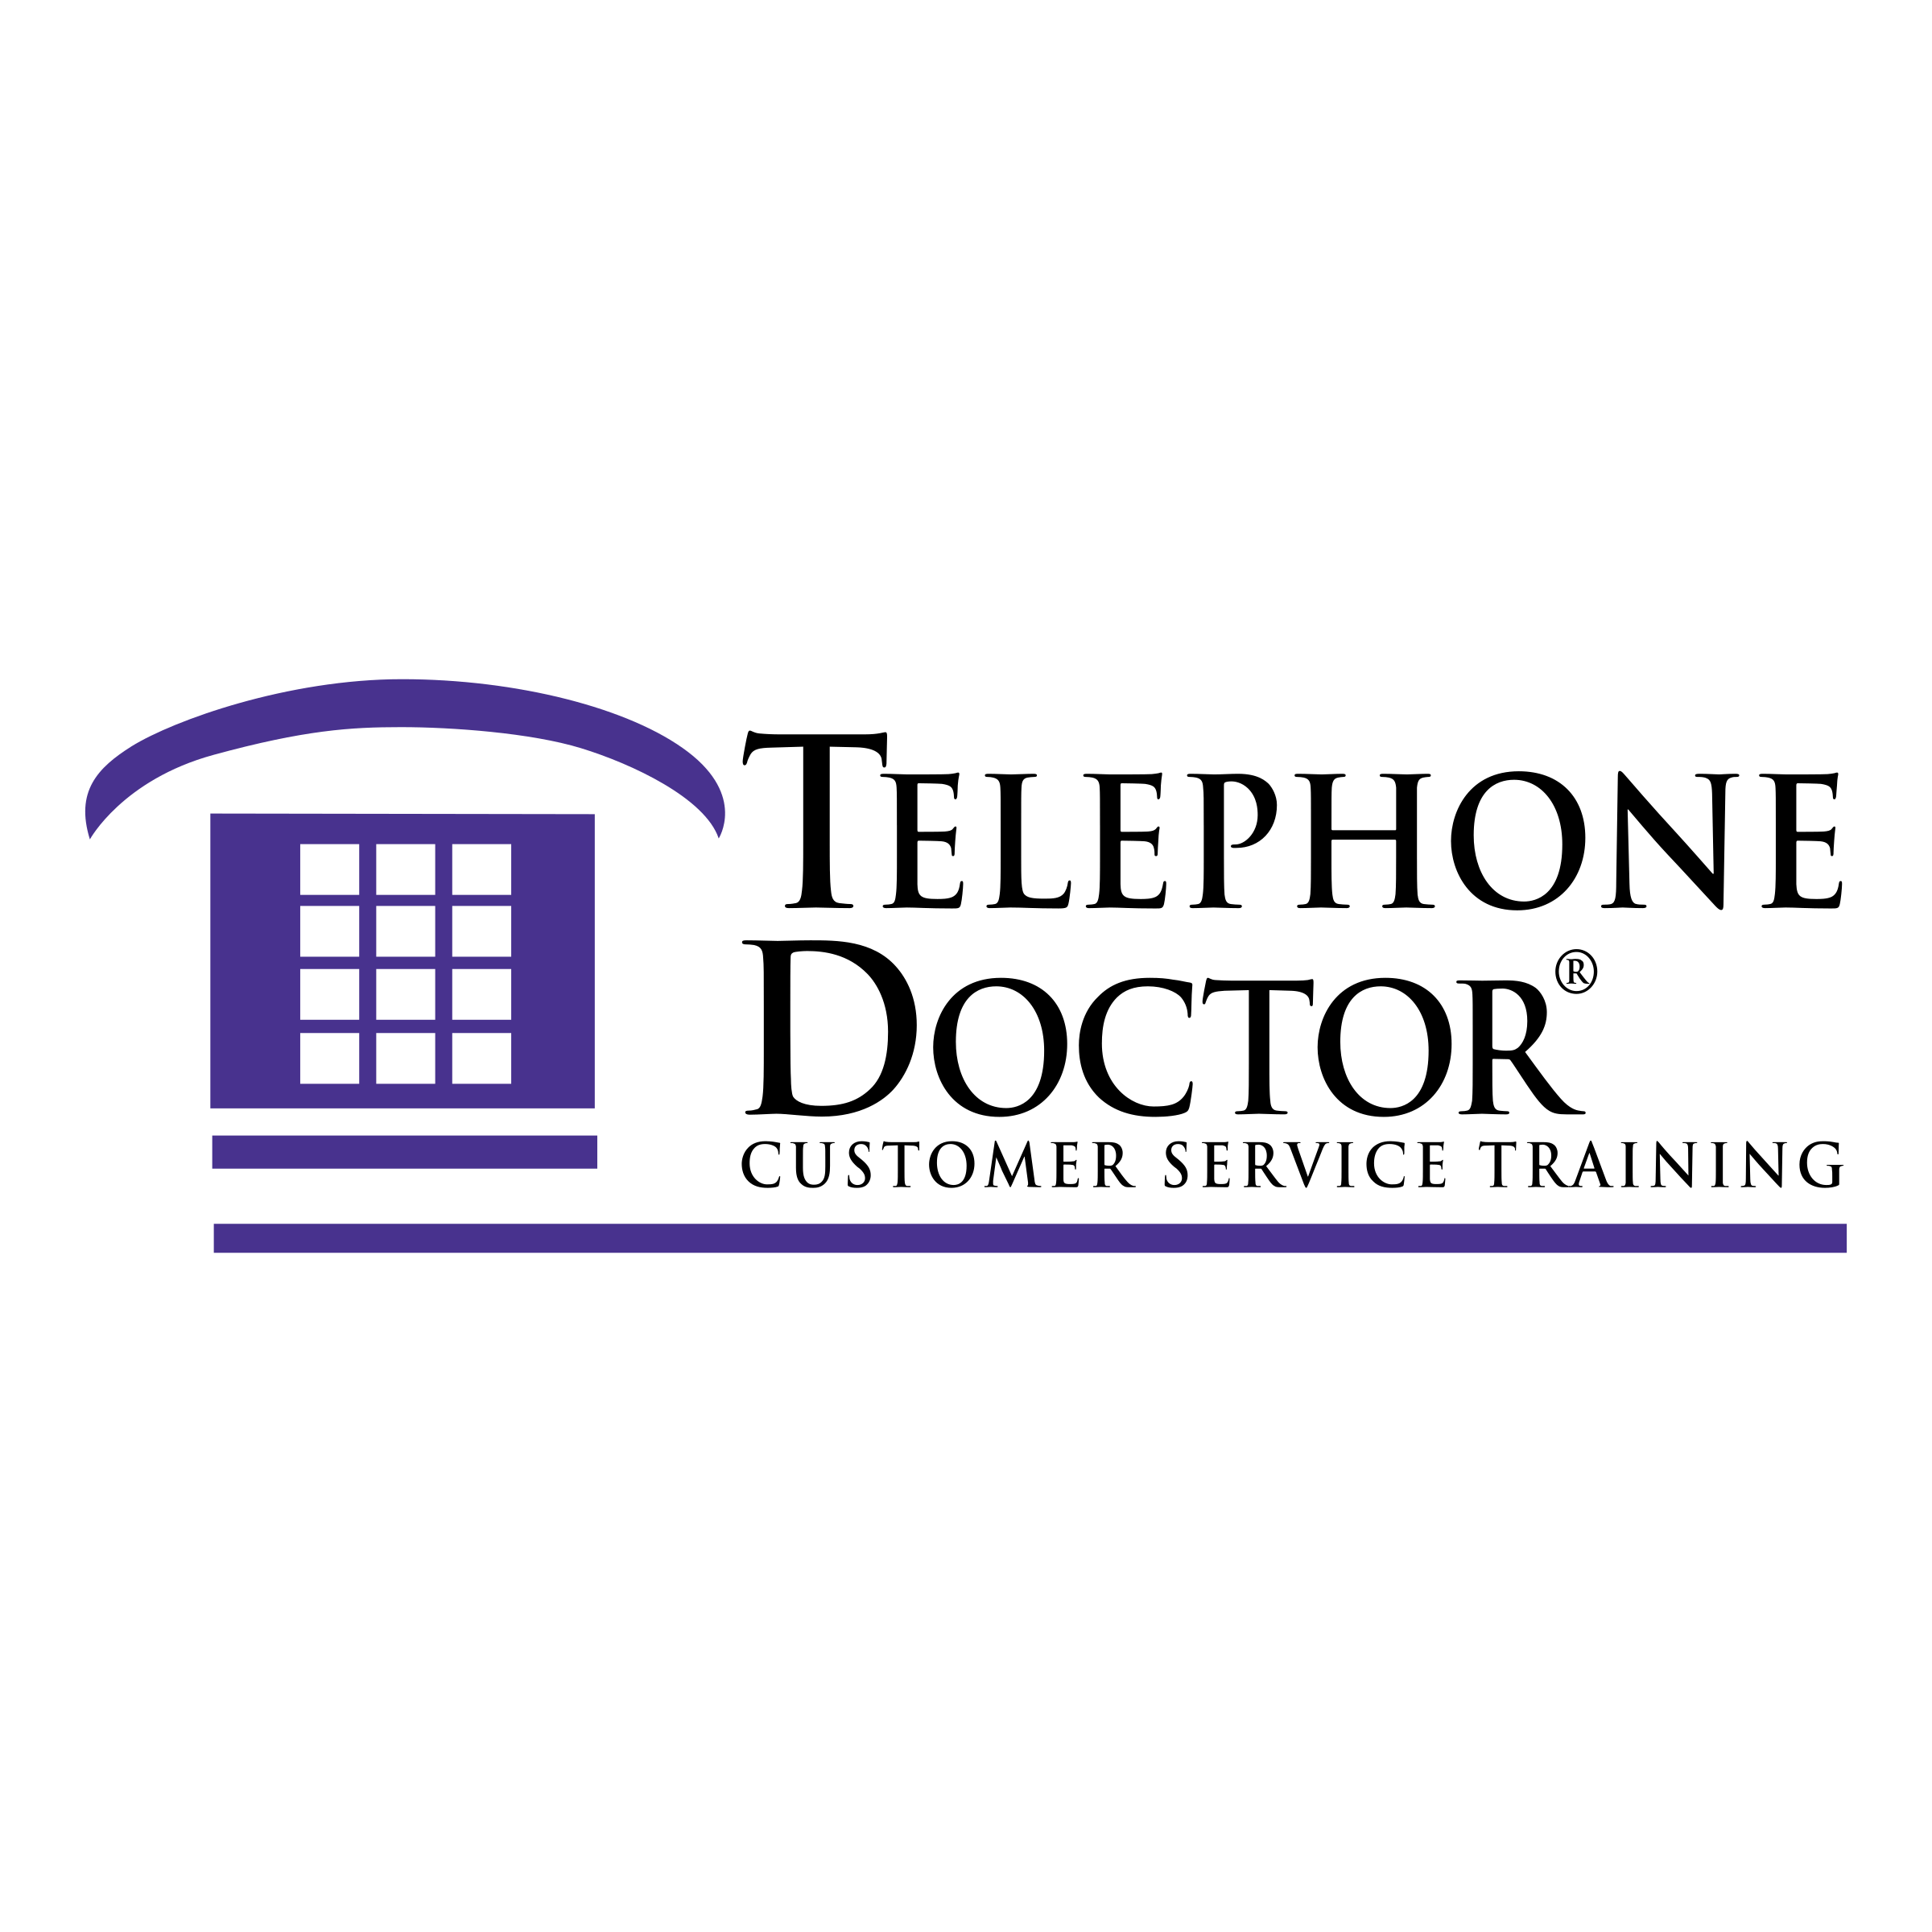 Telephone Transparent Logo - Telephone Doctor Logo PNG Transparent & SVG Vector - Freebie Supply